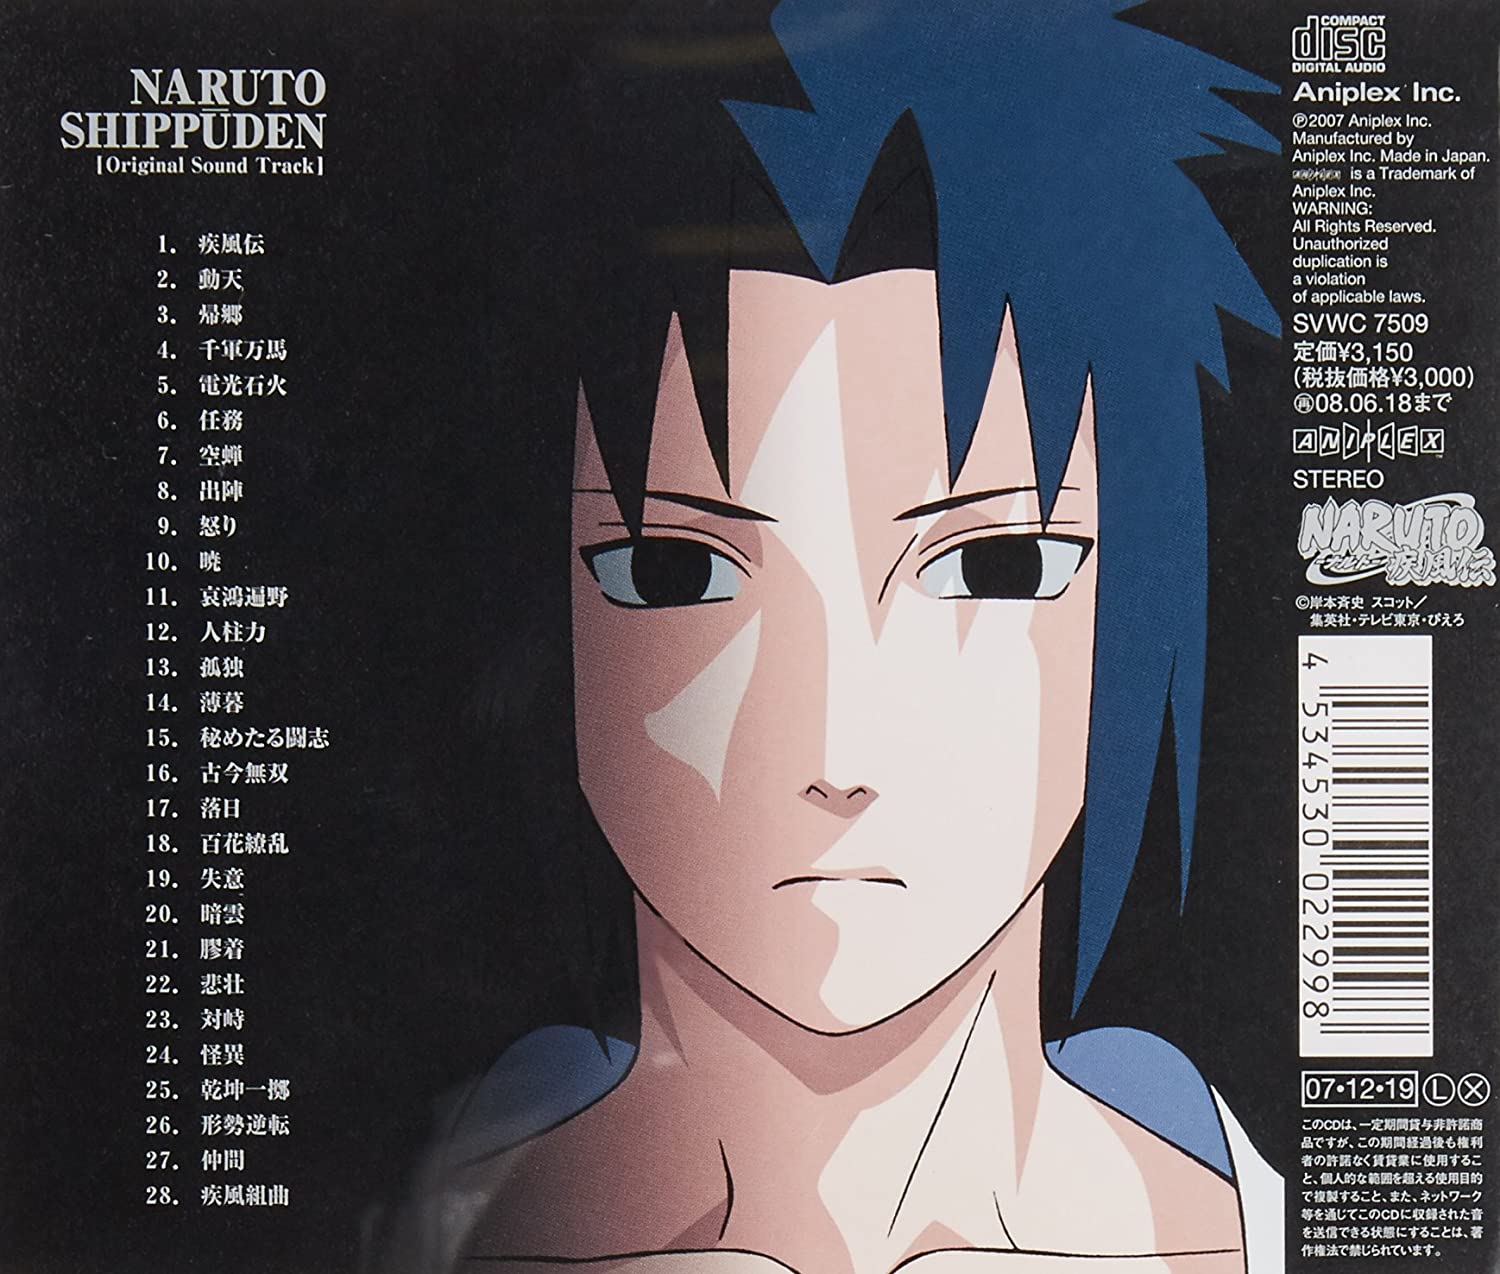 Naruto Shippuden Soundtrack Download